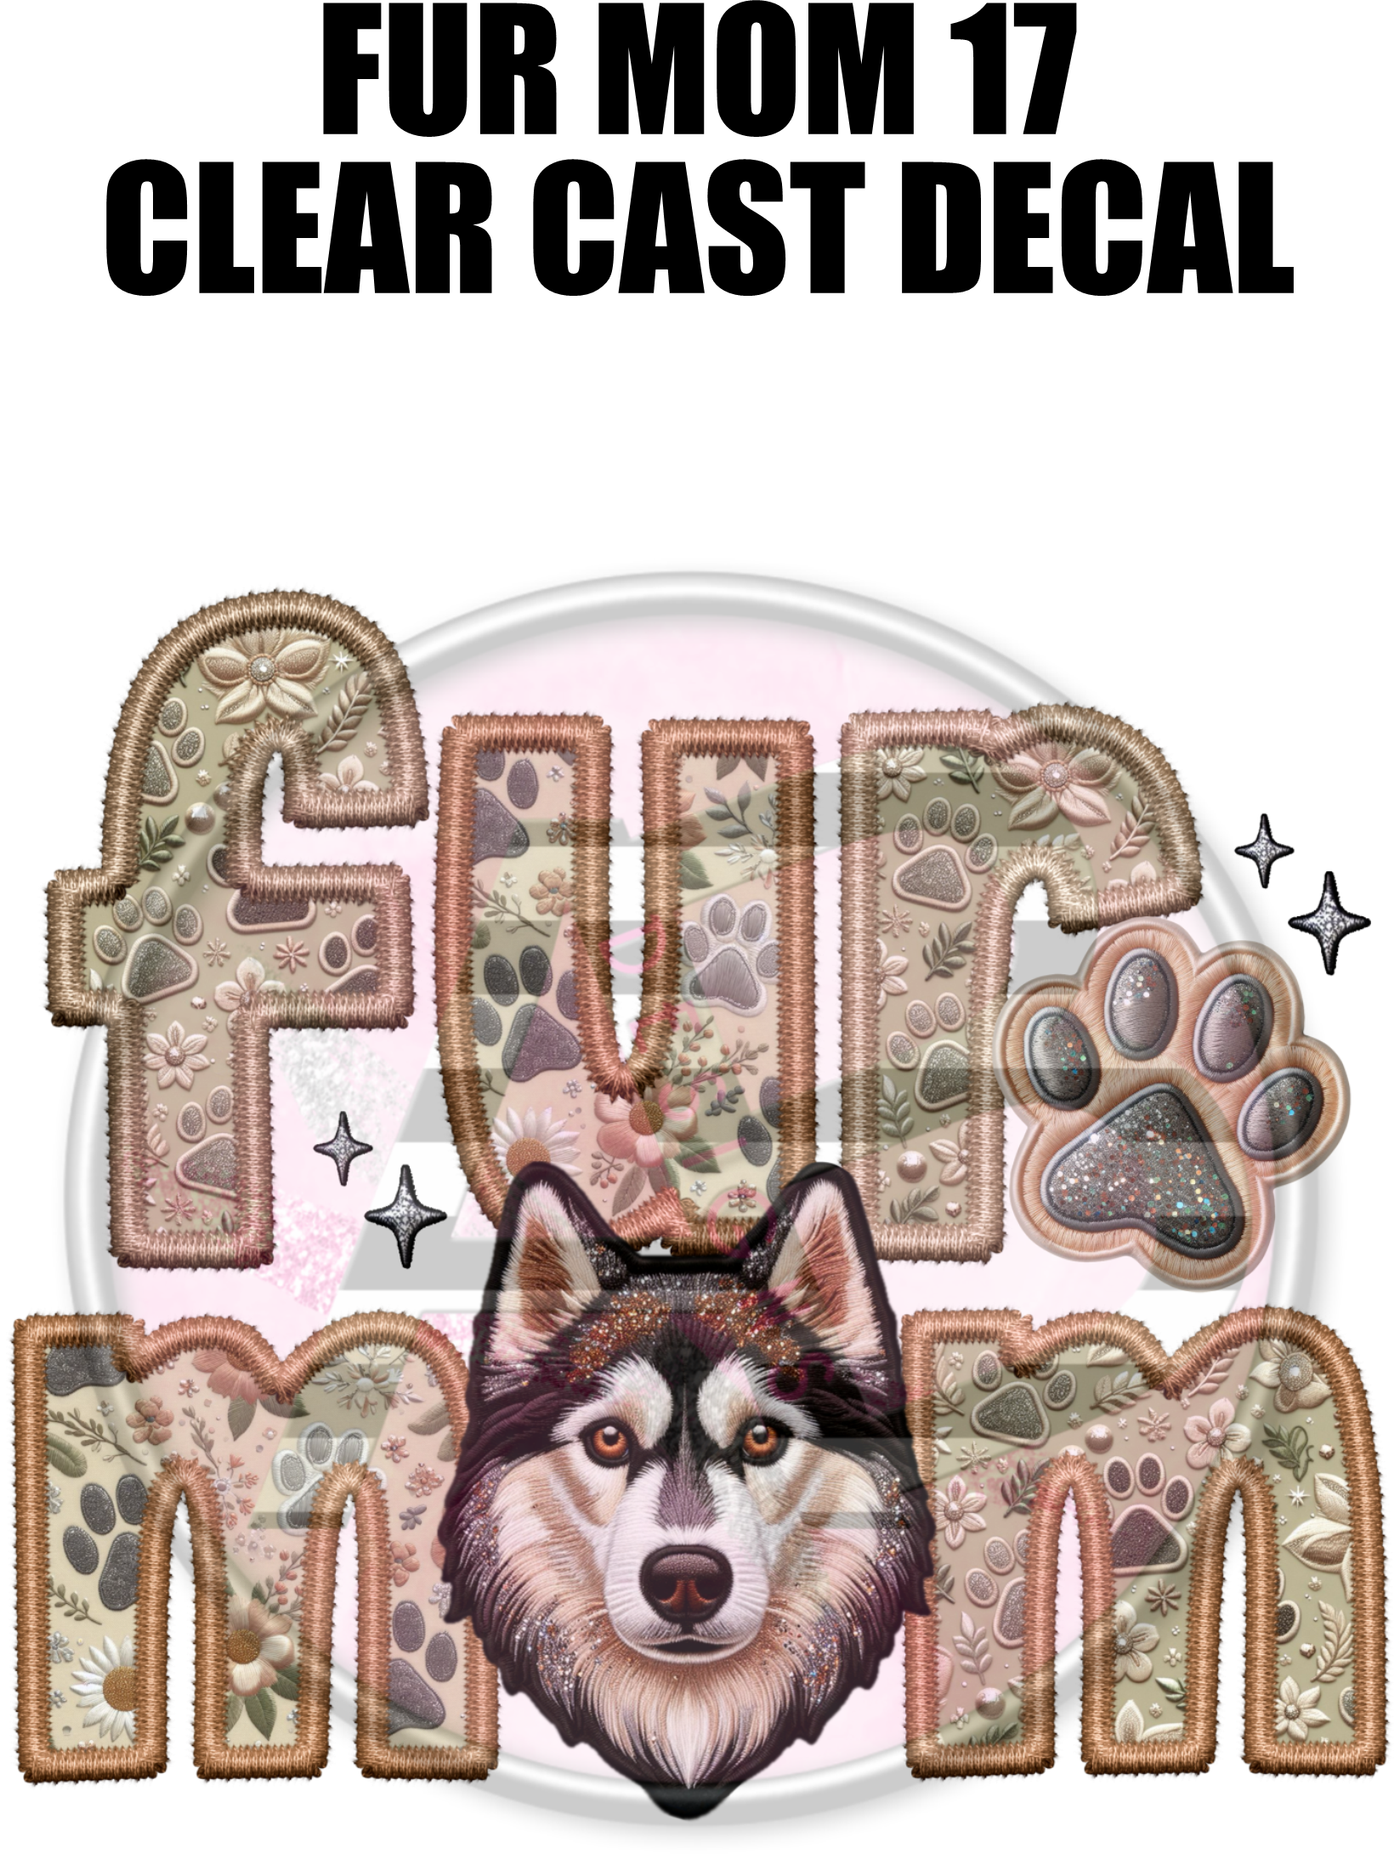 Fur Mom 17 - Clear Cast Decal